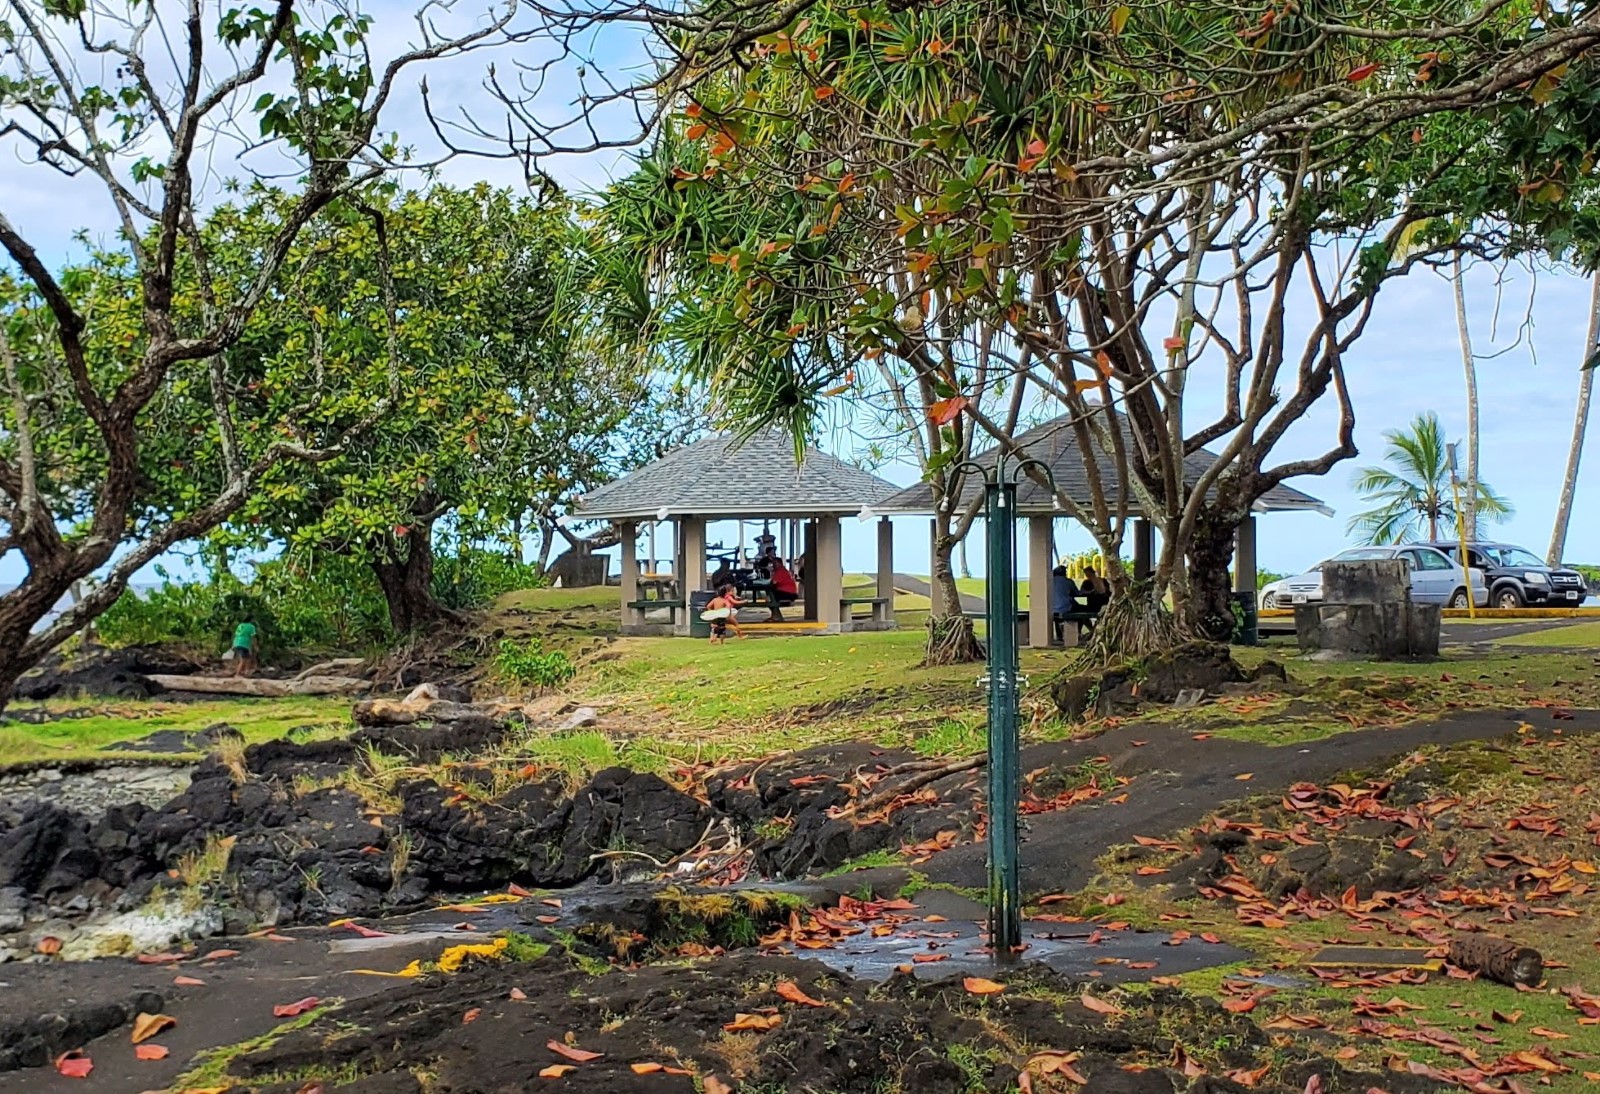 Waiuli Beach Park (Leleiwi)